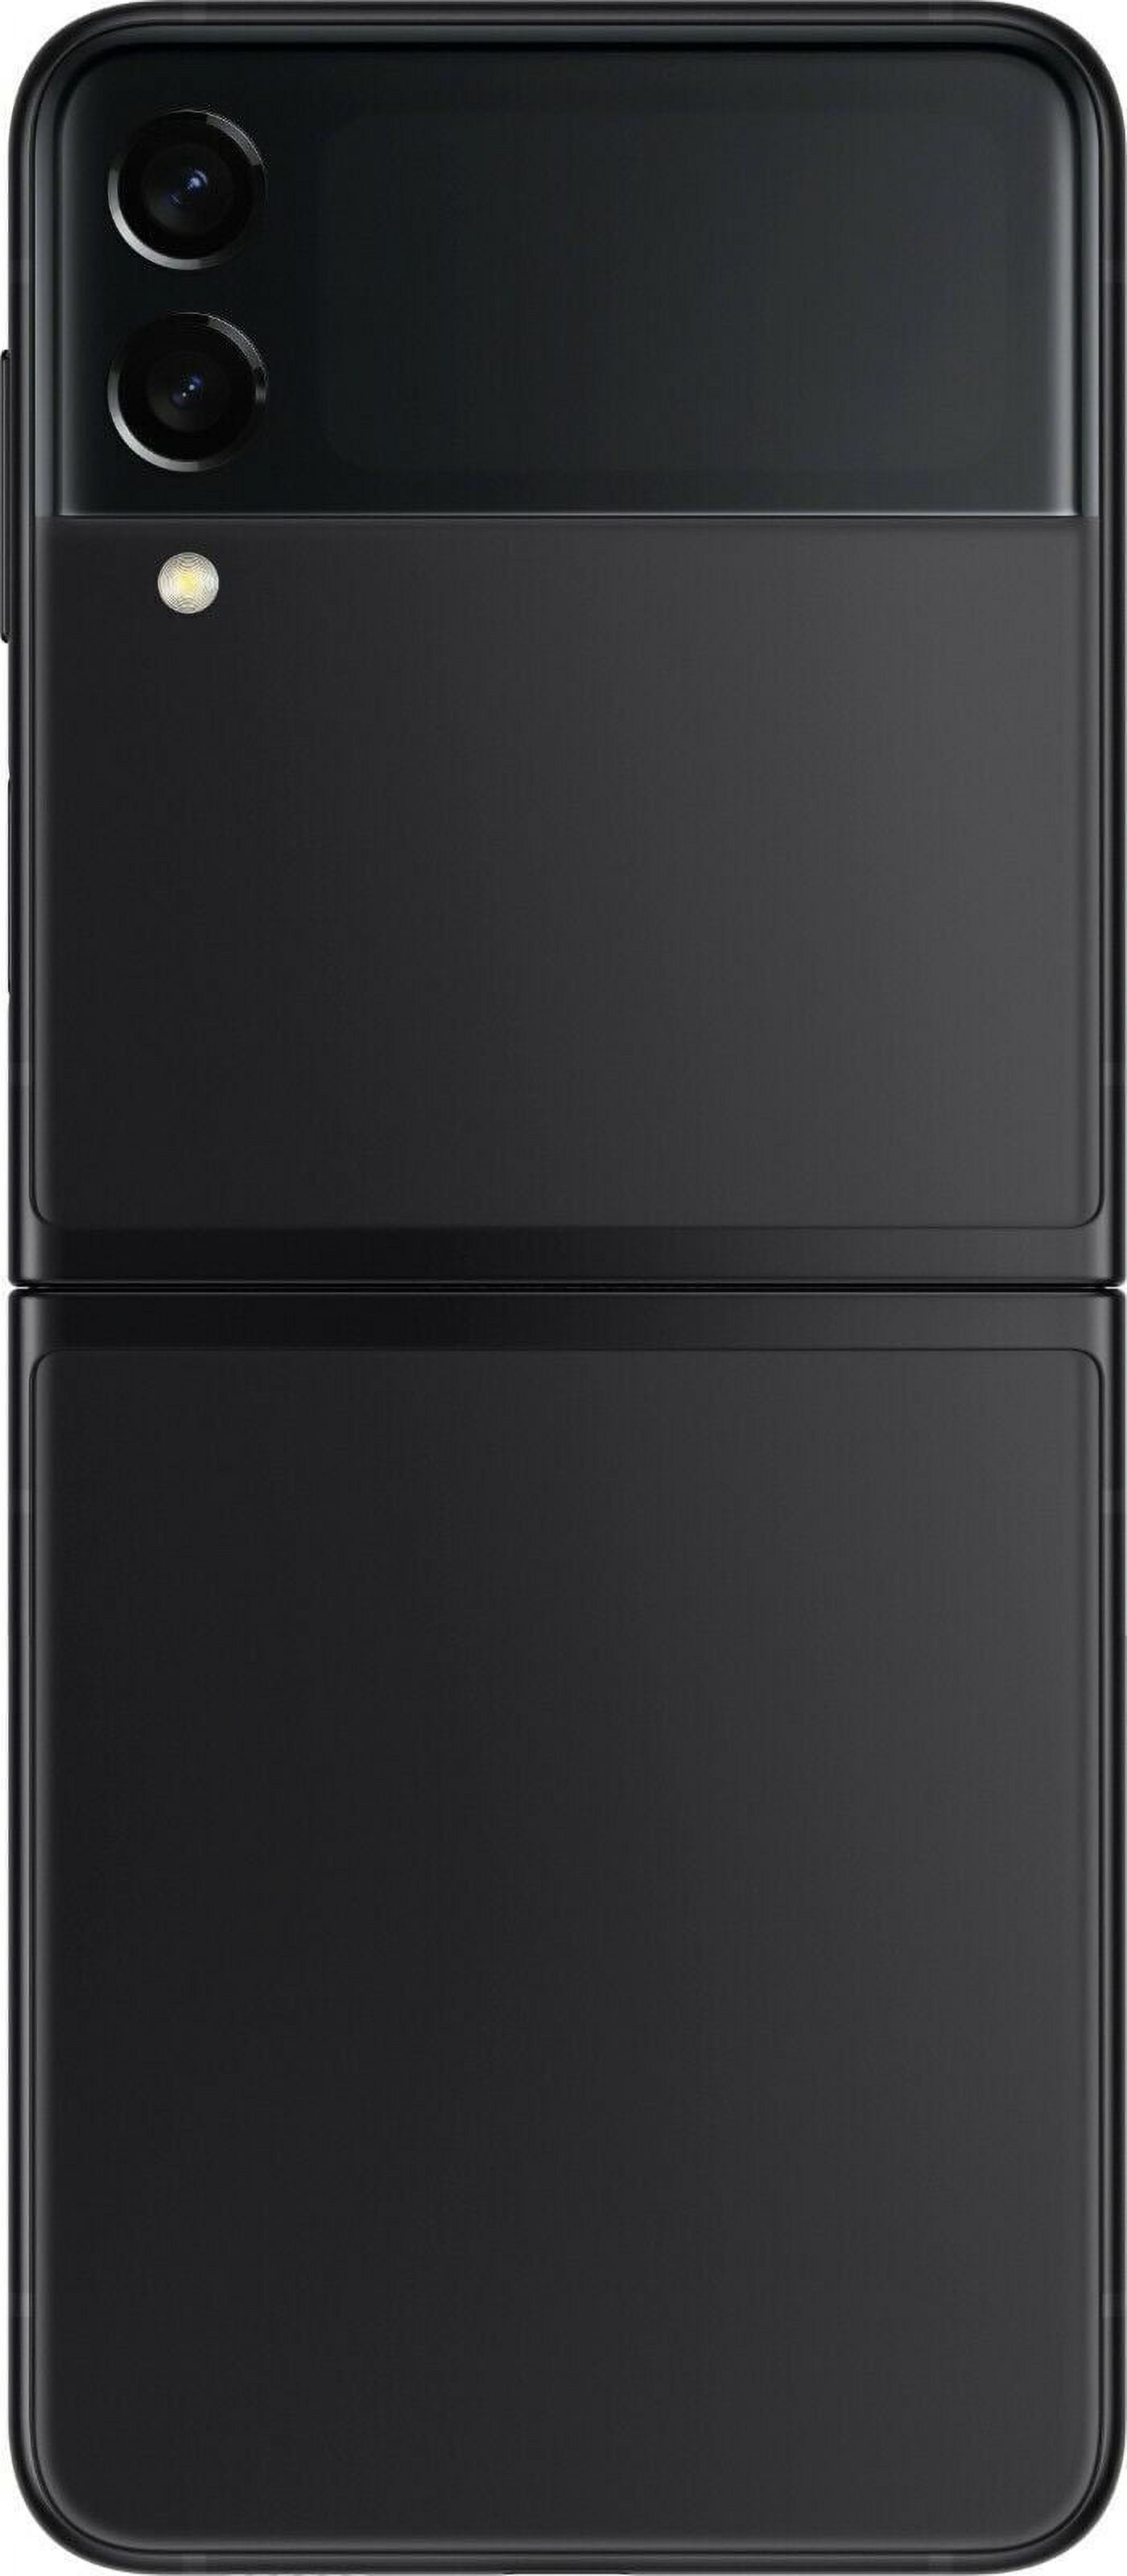 Samsung Galaxy Z Flip 3 5G SM-F711U1 128GB Black (US Model) - Factory Unlocked Cell Phone - Very Good Condition - image 2 of 3